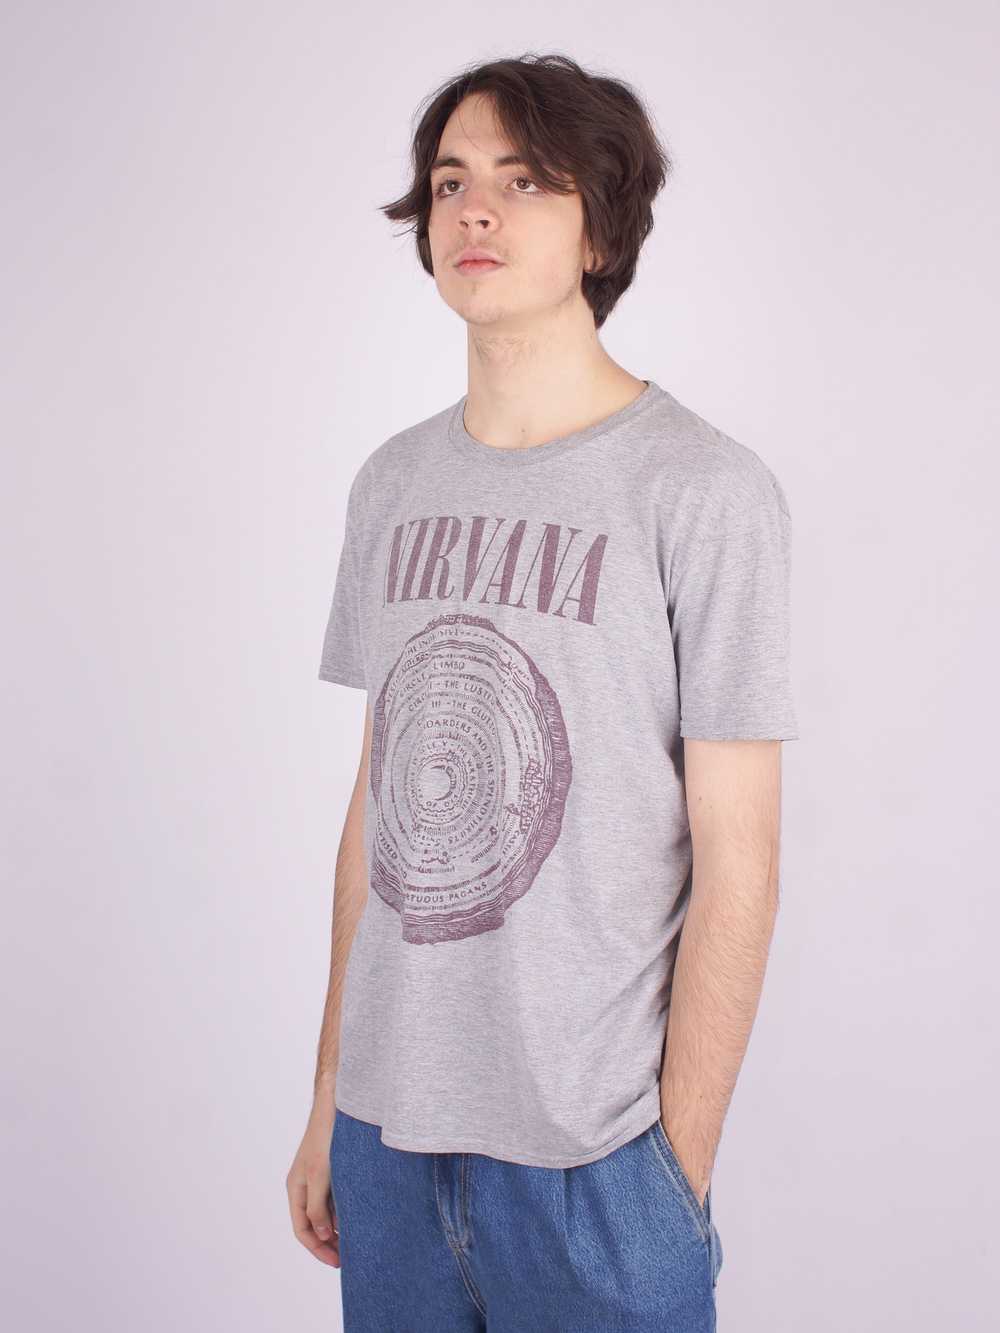 Band Tees × Nirvana 2017 Nirvana T Shirt - image 2